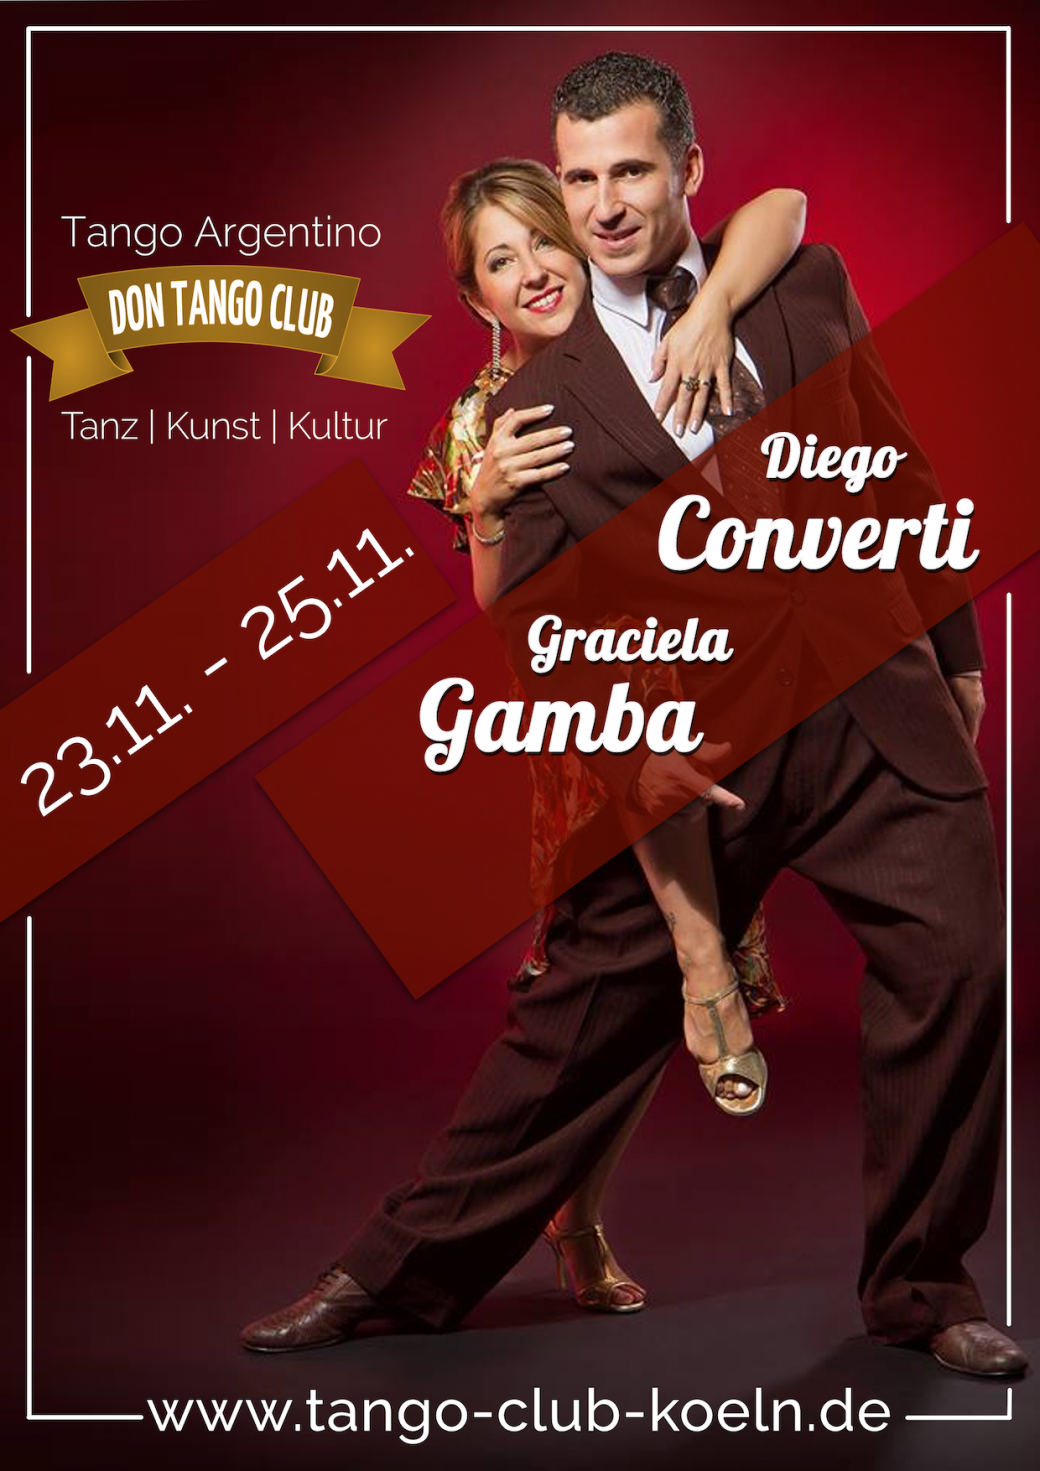 Don Tango Club Koeln Diego Converti Graciela Gamba Workshop Auftritt 2018 Tango Argentino